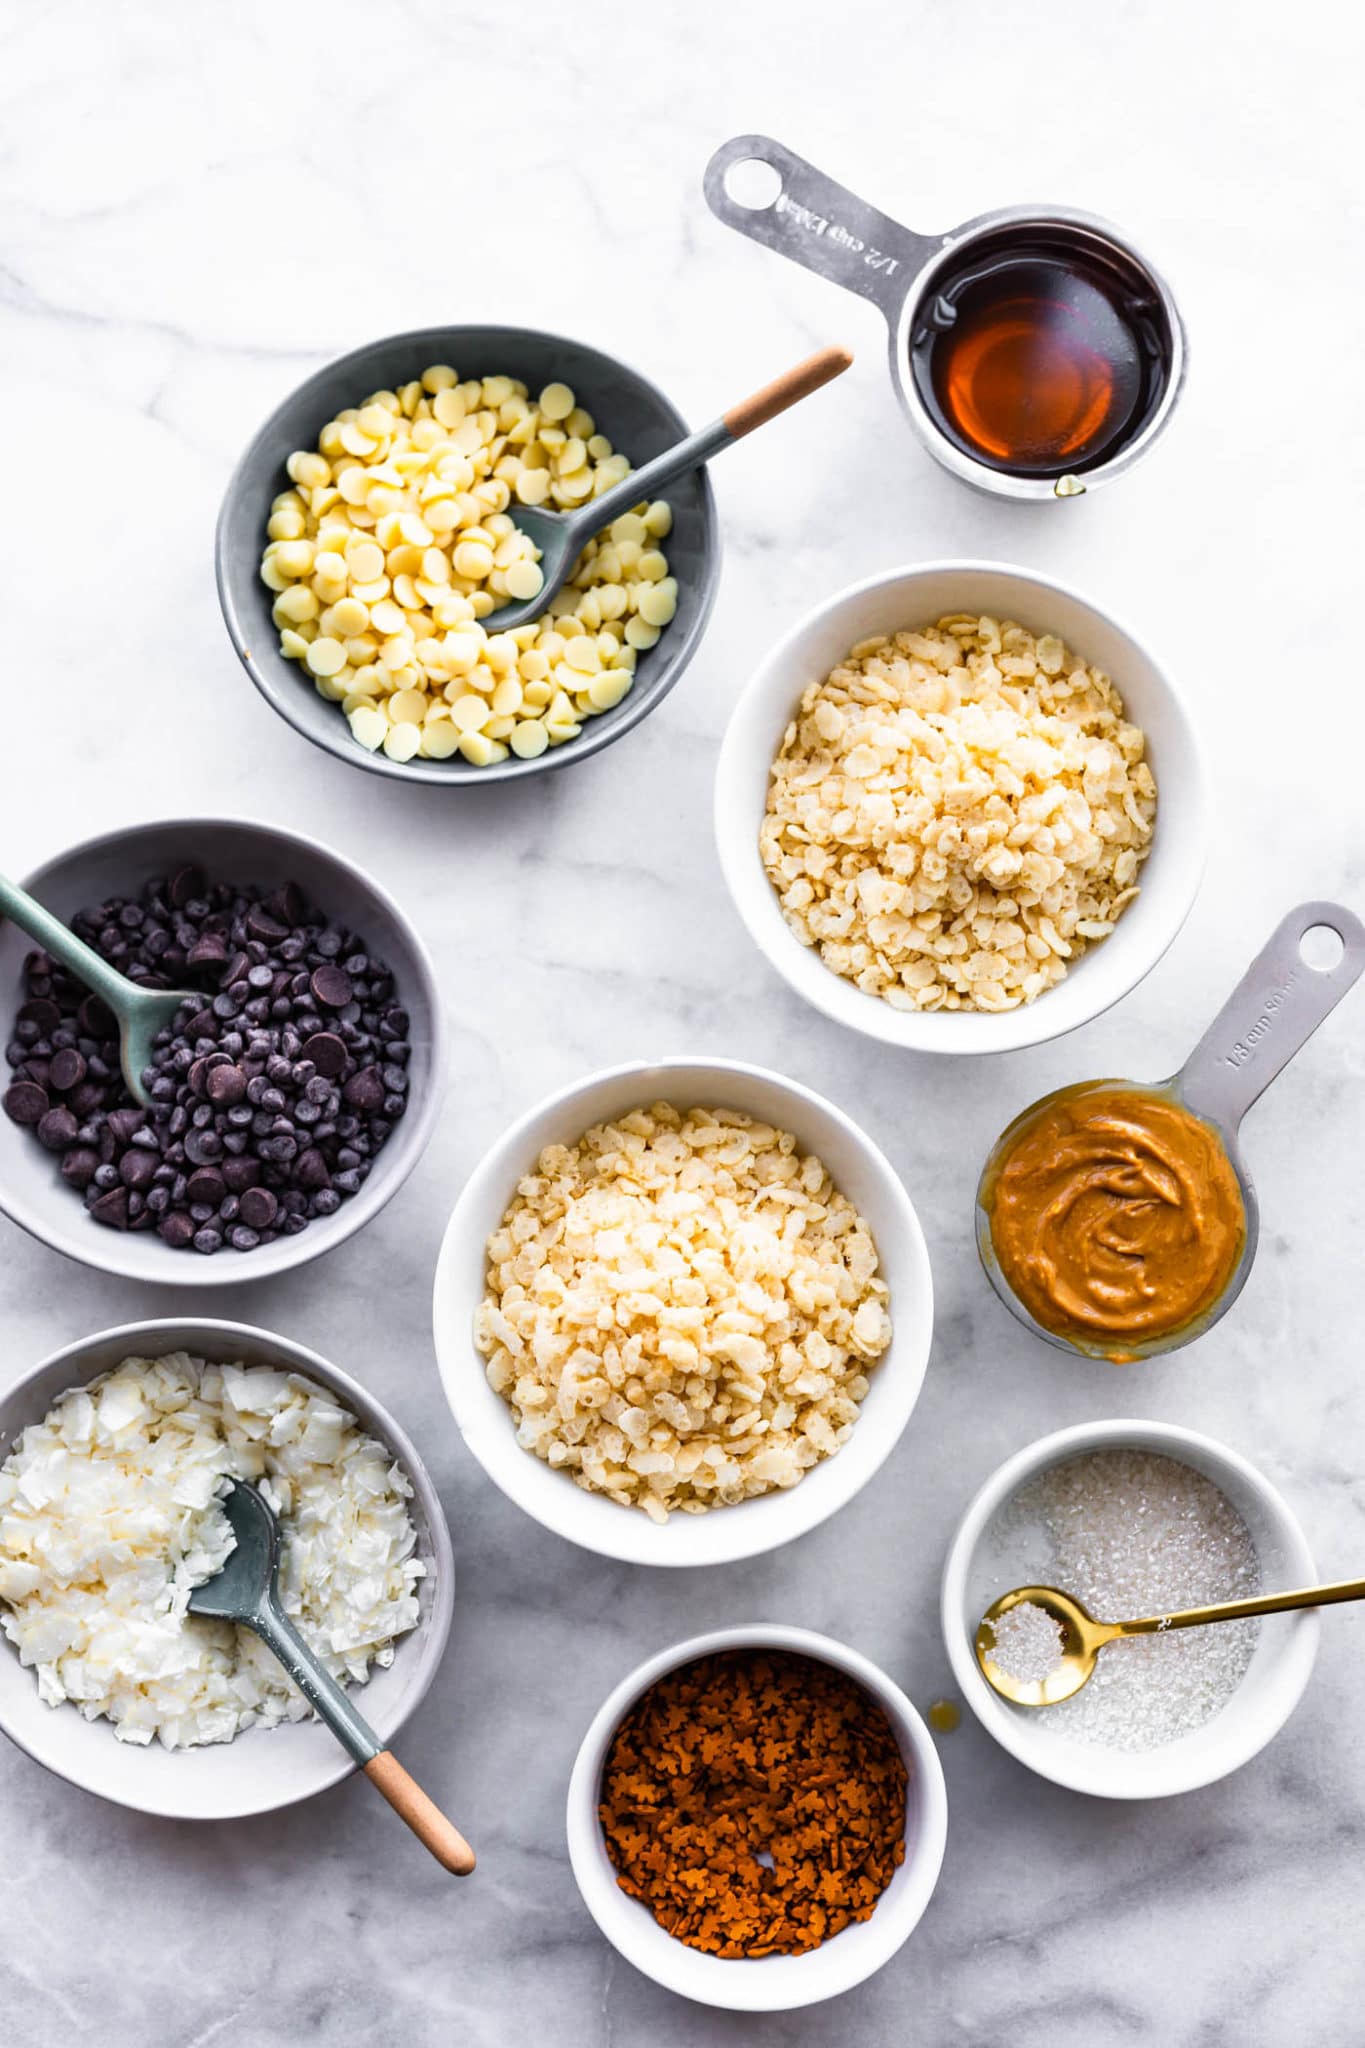 Ingredients for vegan peanut butter rice krispie treats